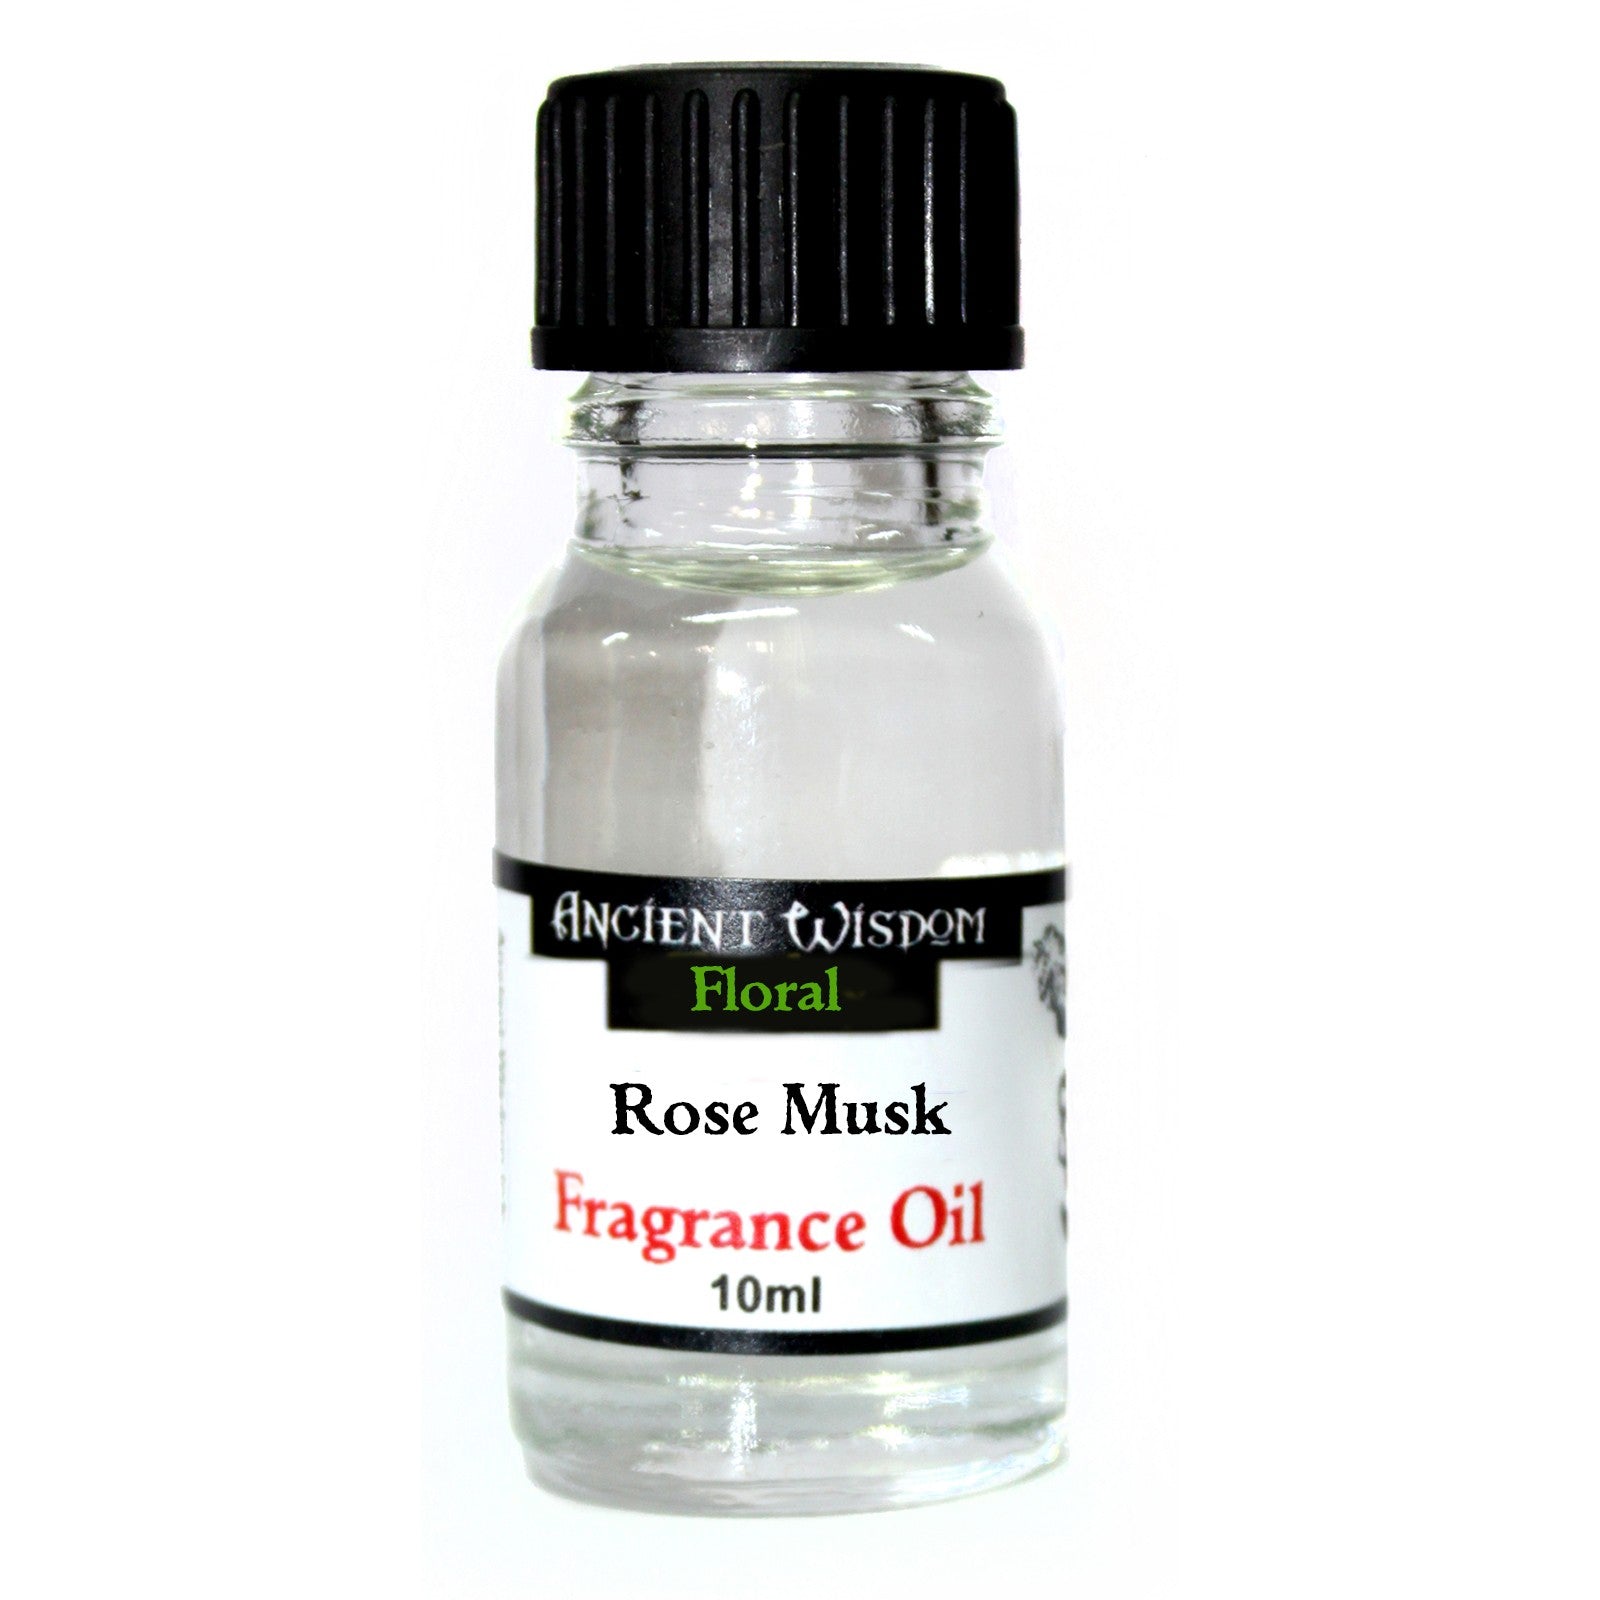 View 10ml Rose Musk Fragrance Oil information